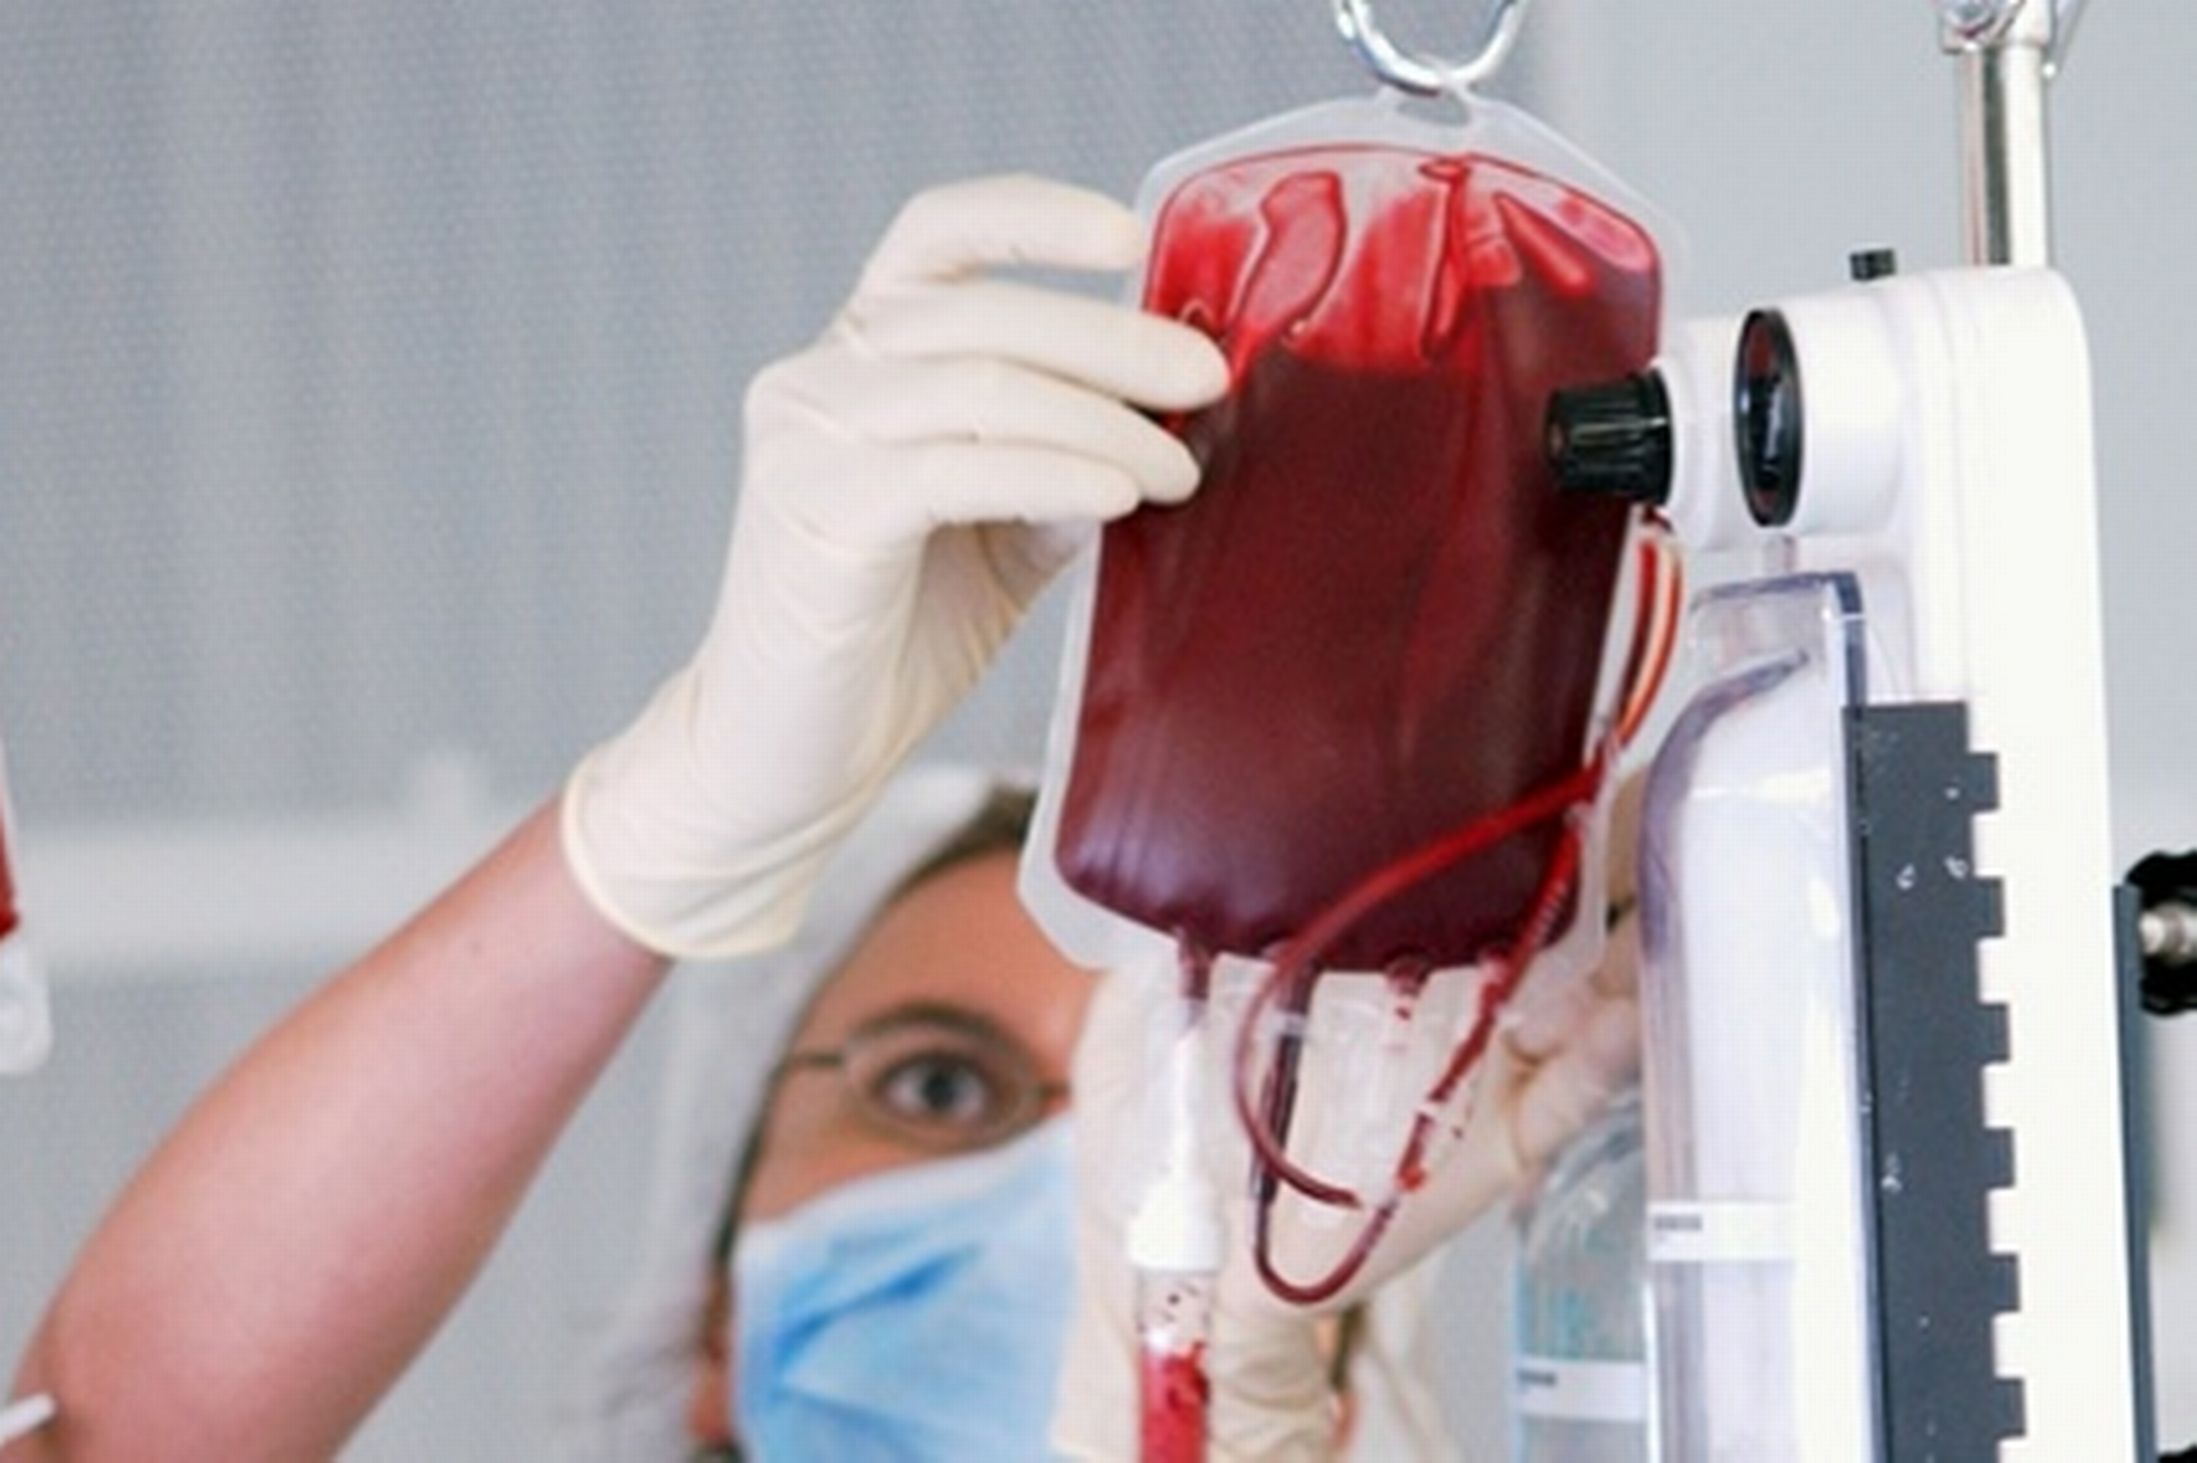 Операция заменного переливания крови (ОЗПК)